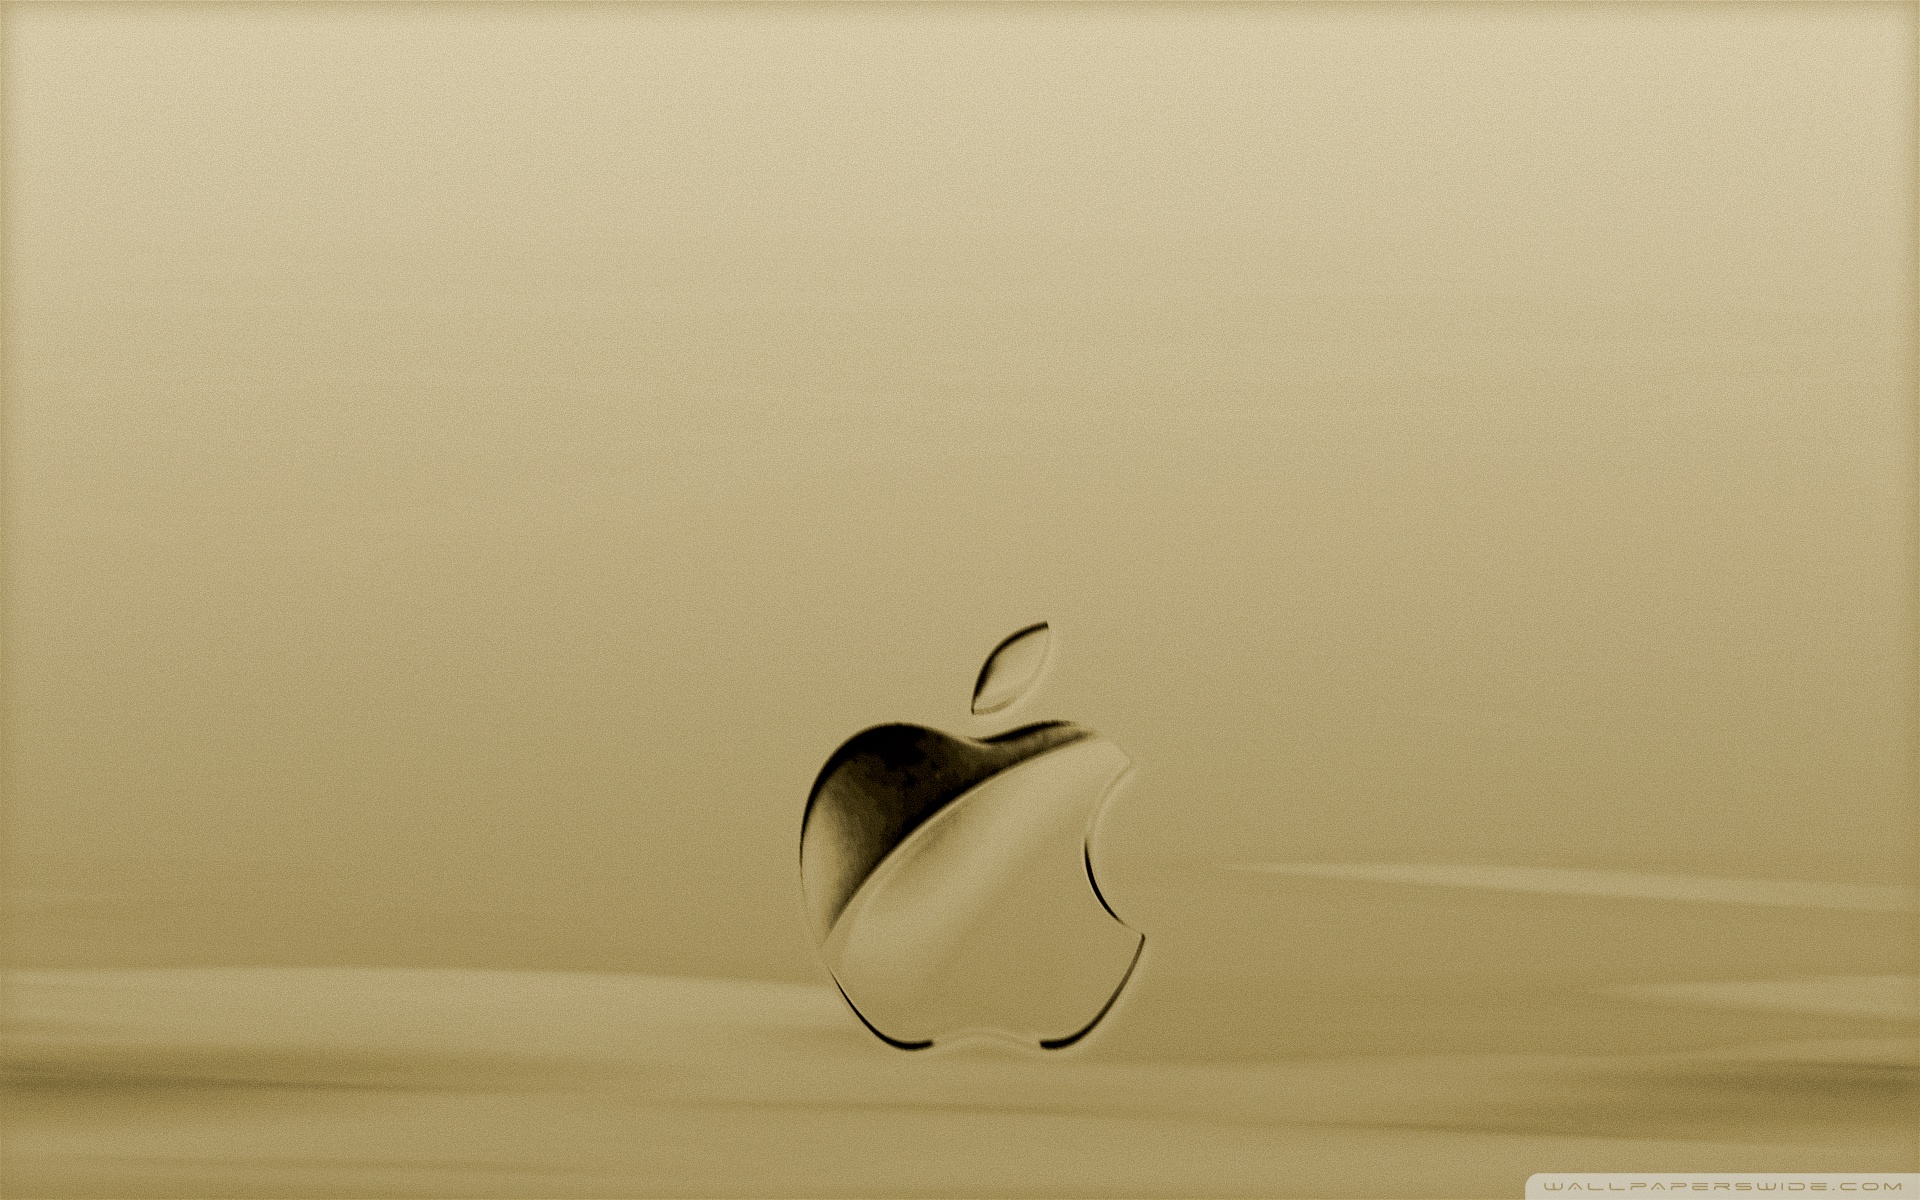 Обои с вырезом. Яблоко айфон. Apple песок обои. Фон Аппле. Apple обои Винтаж.